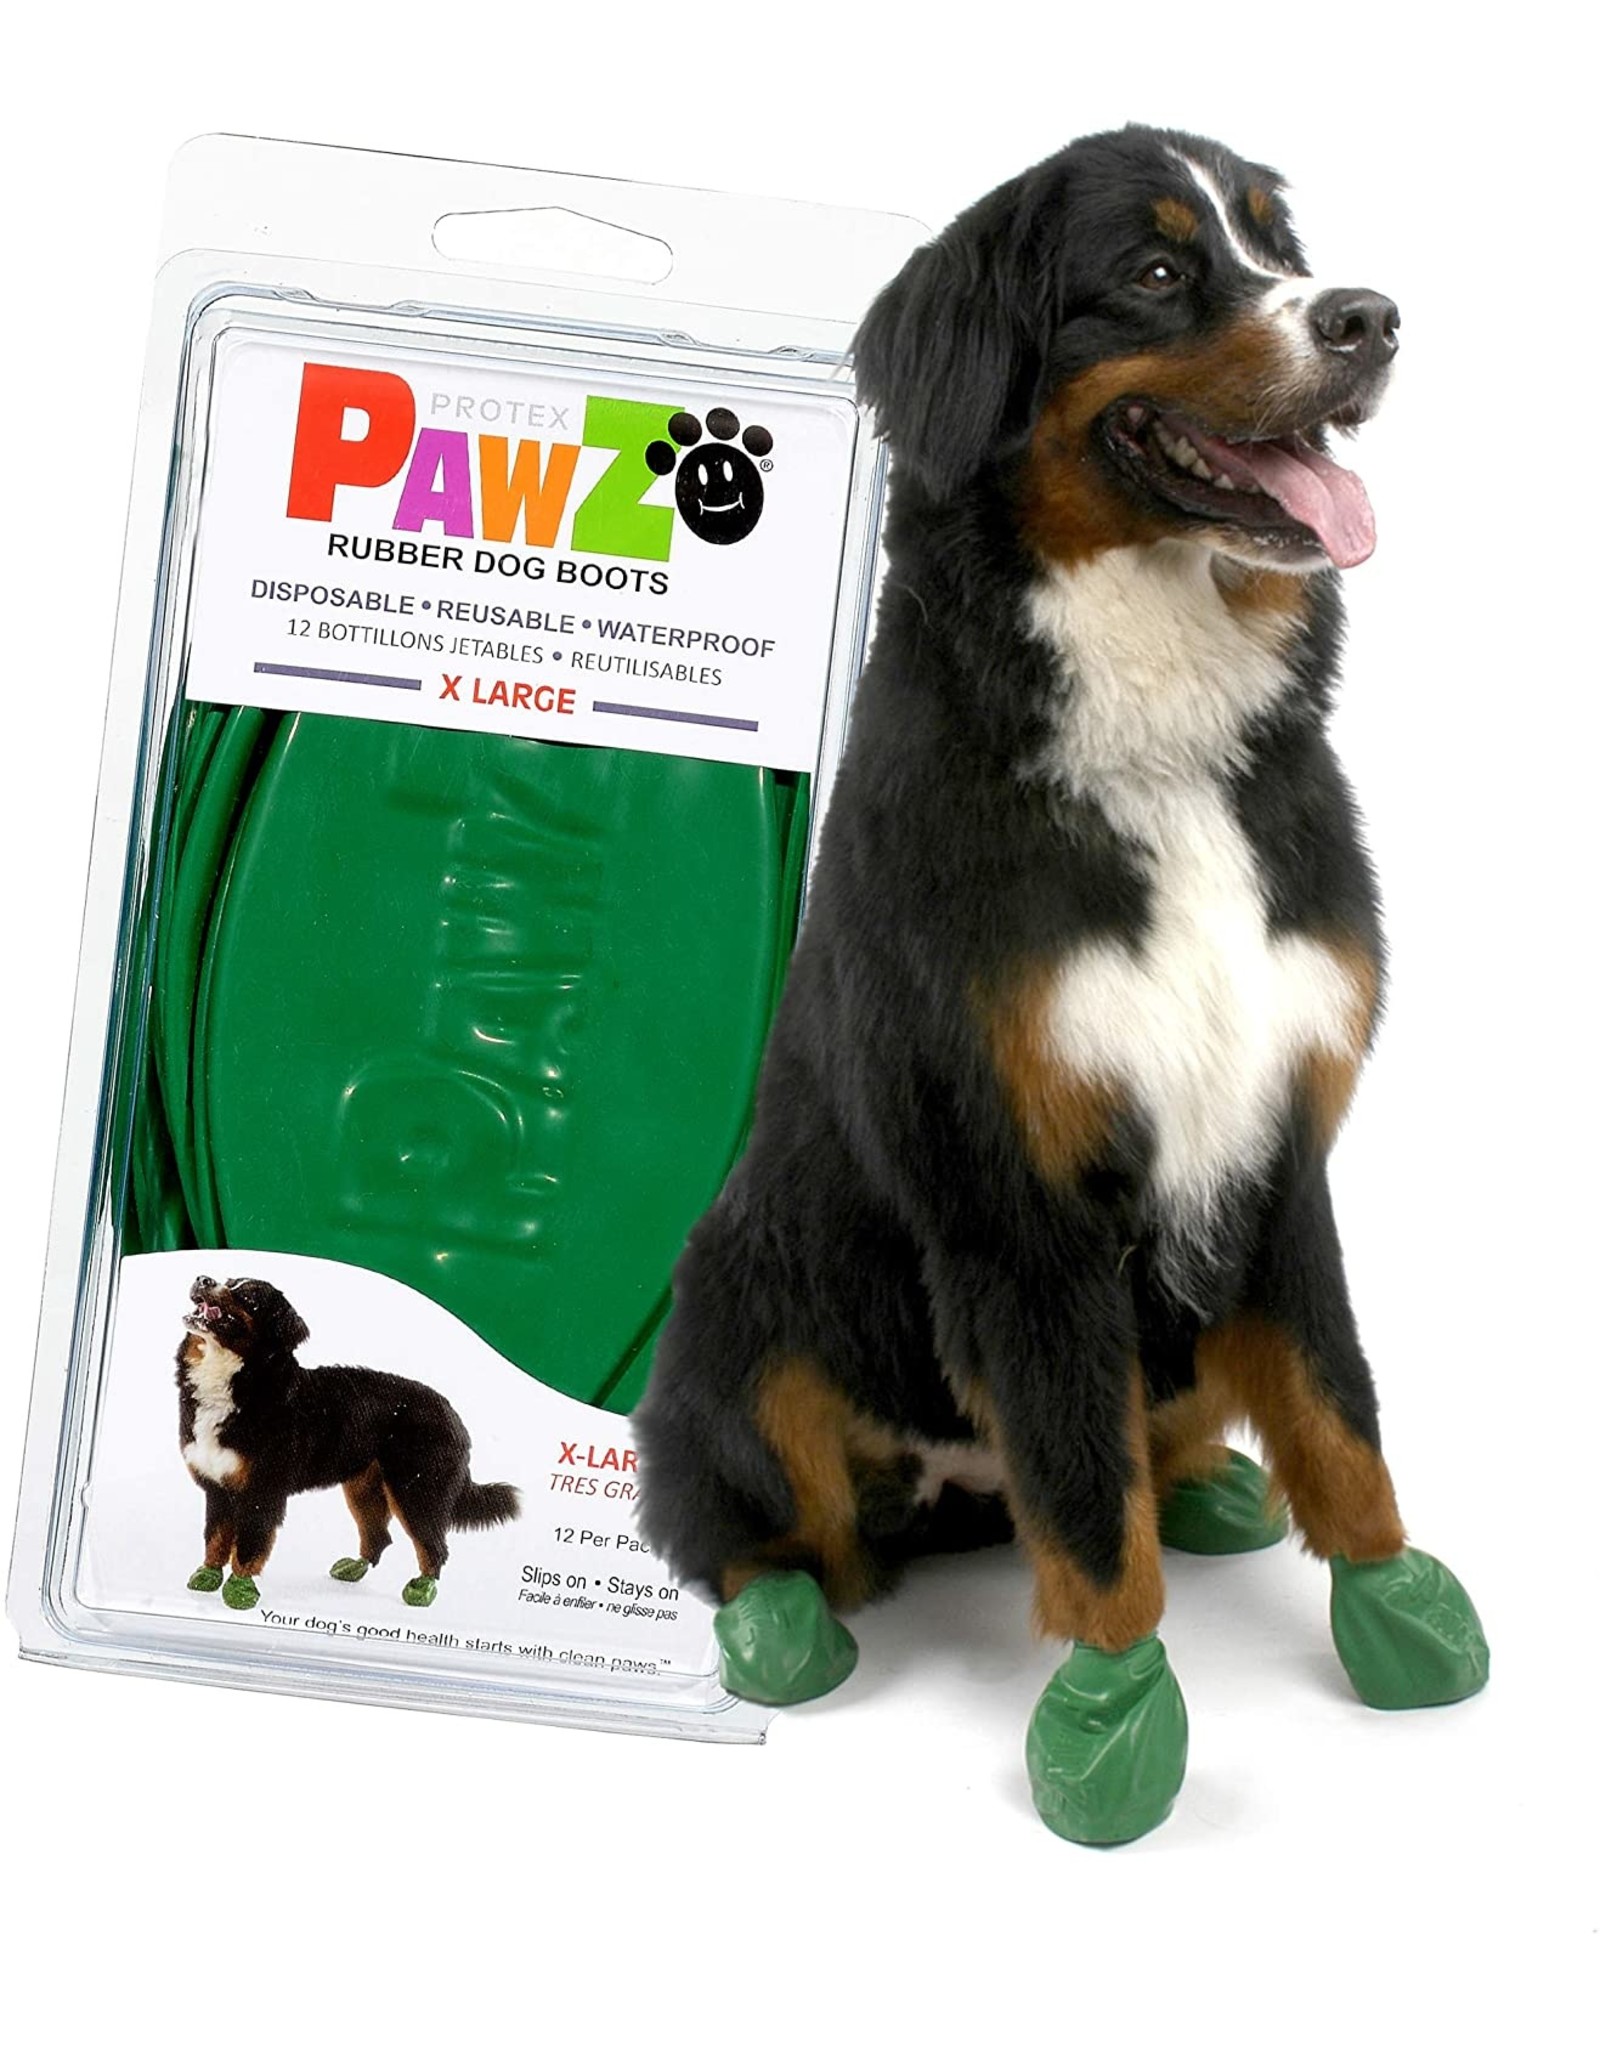 Pawz Dog Boots PAWZ DISPOSABLE & REUSABLE BOOTS